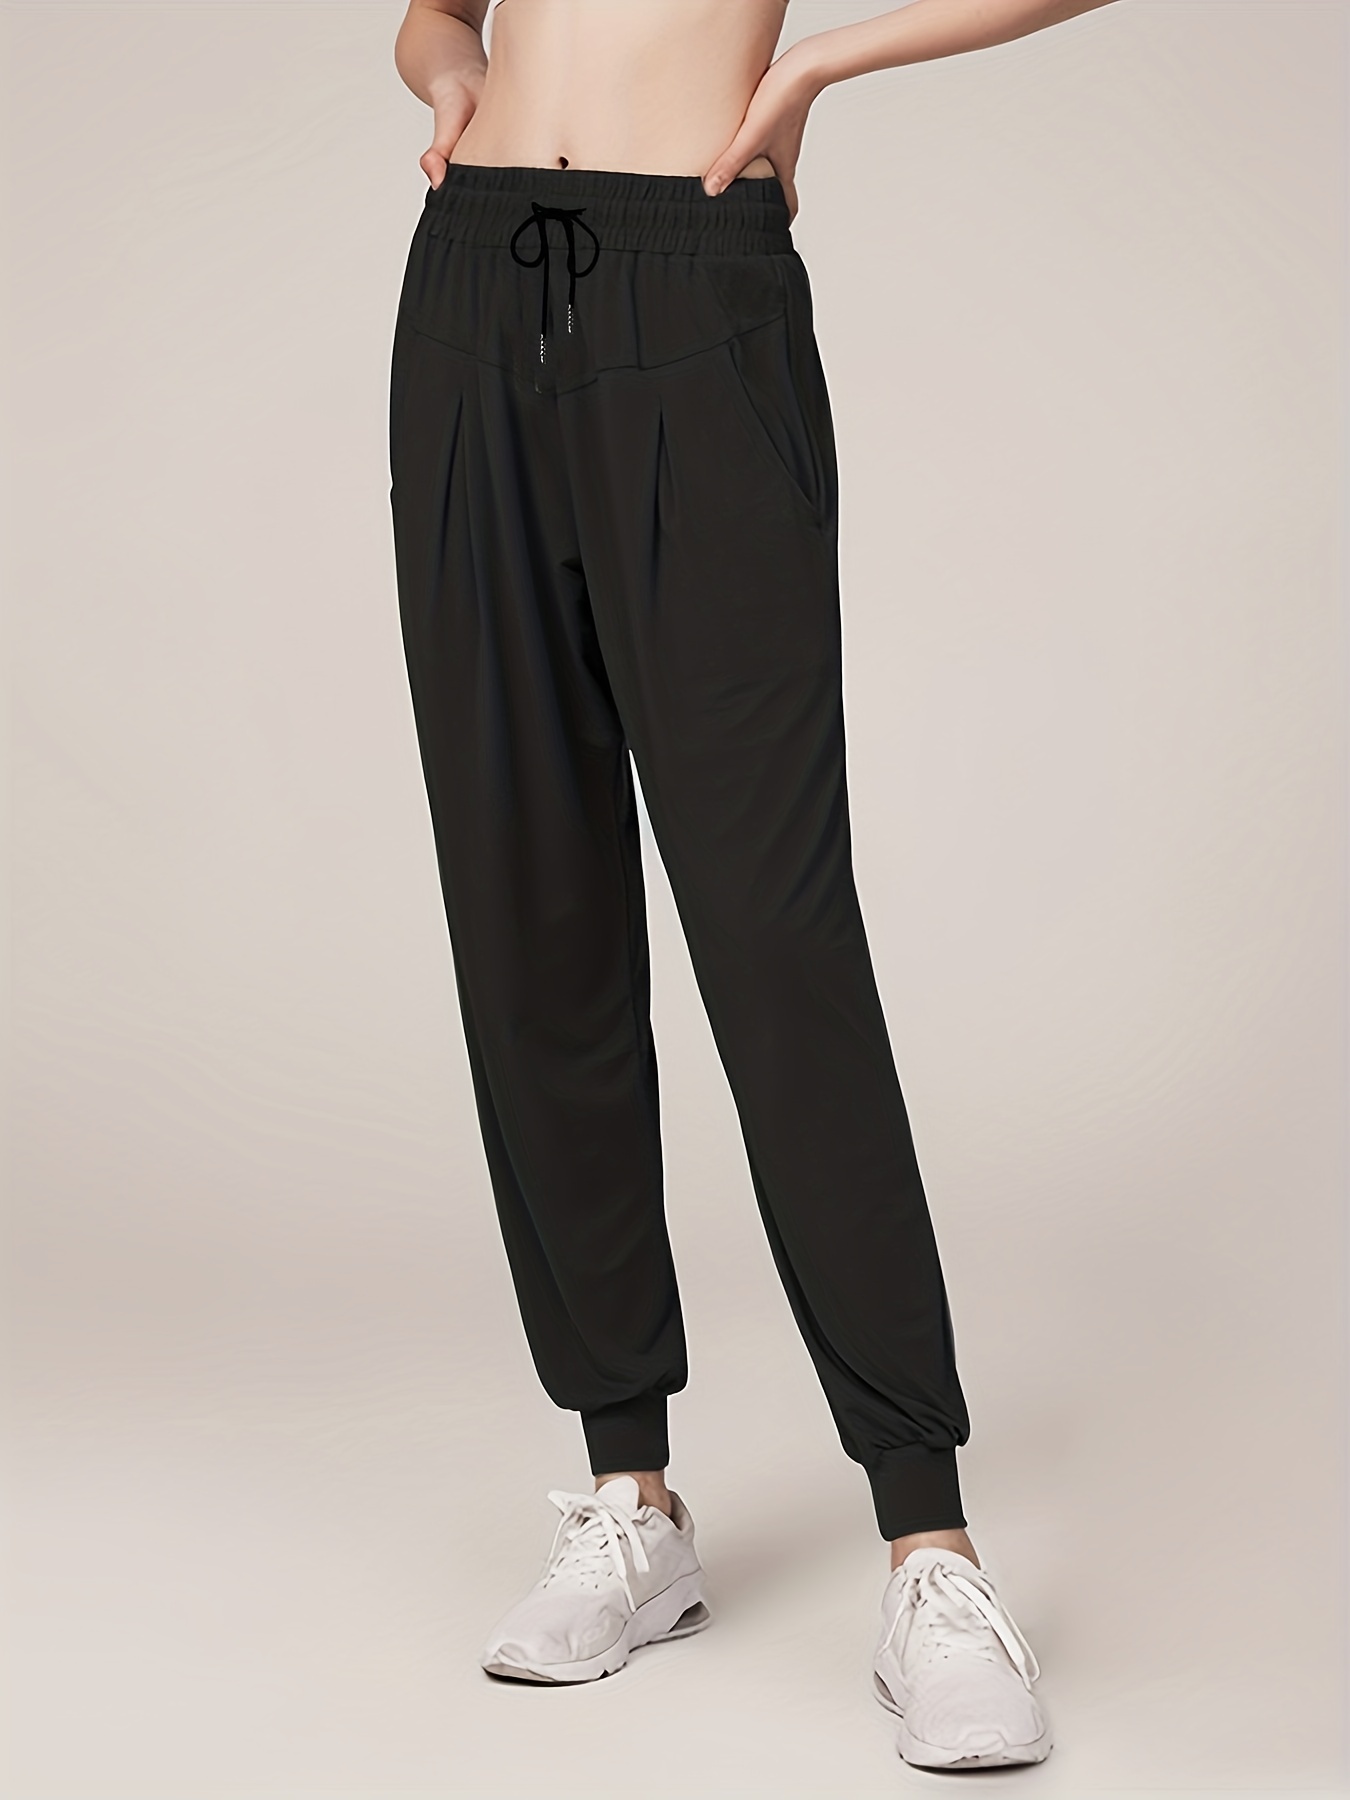 Buy the Lululemon Women's Loose Fit Drawstring Active Wear Pants Size 6